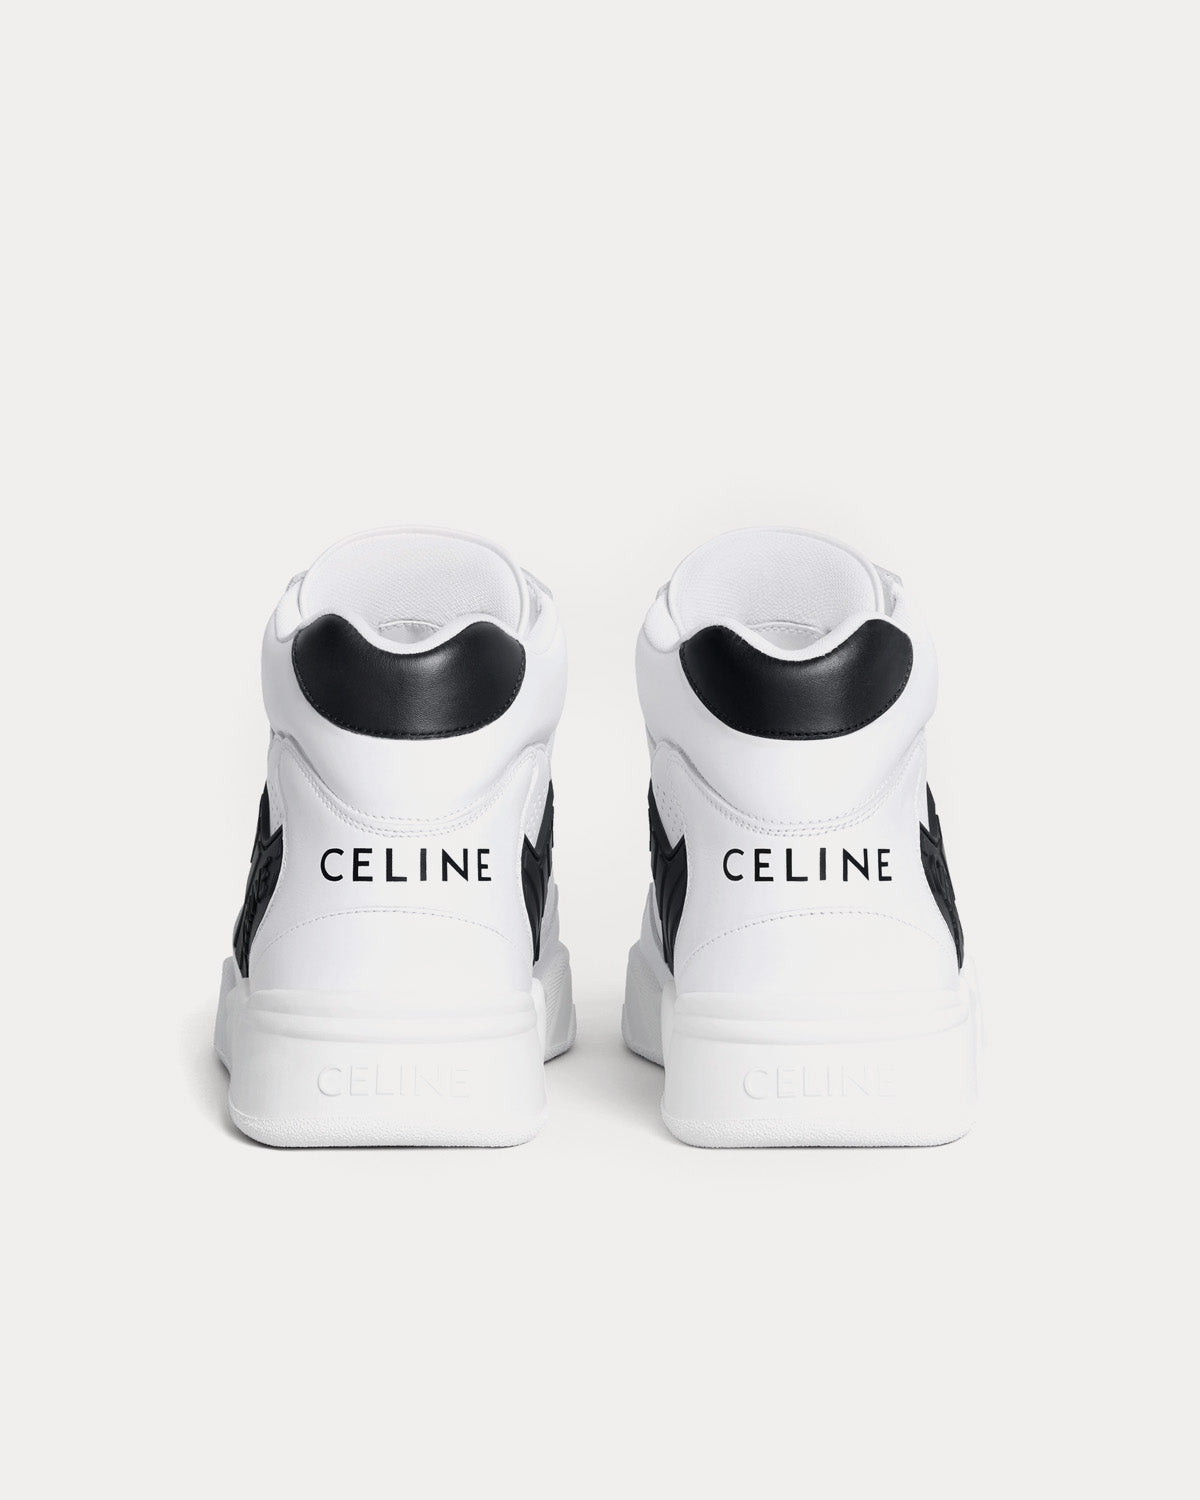 Celine - CT-06 Calfskin & Laminated Calfskin Optic White / Black High Top Sneakers